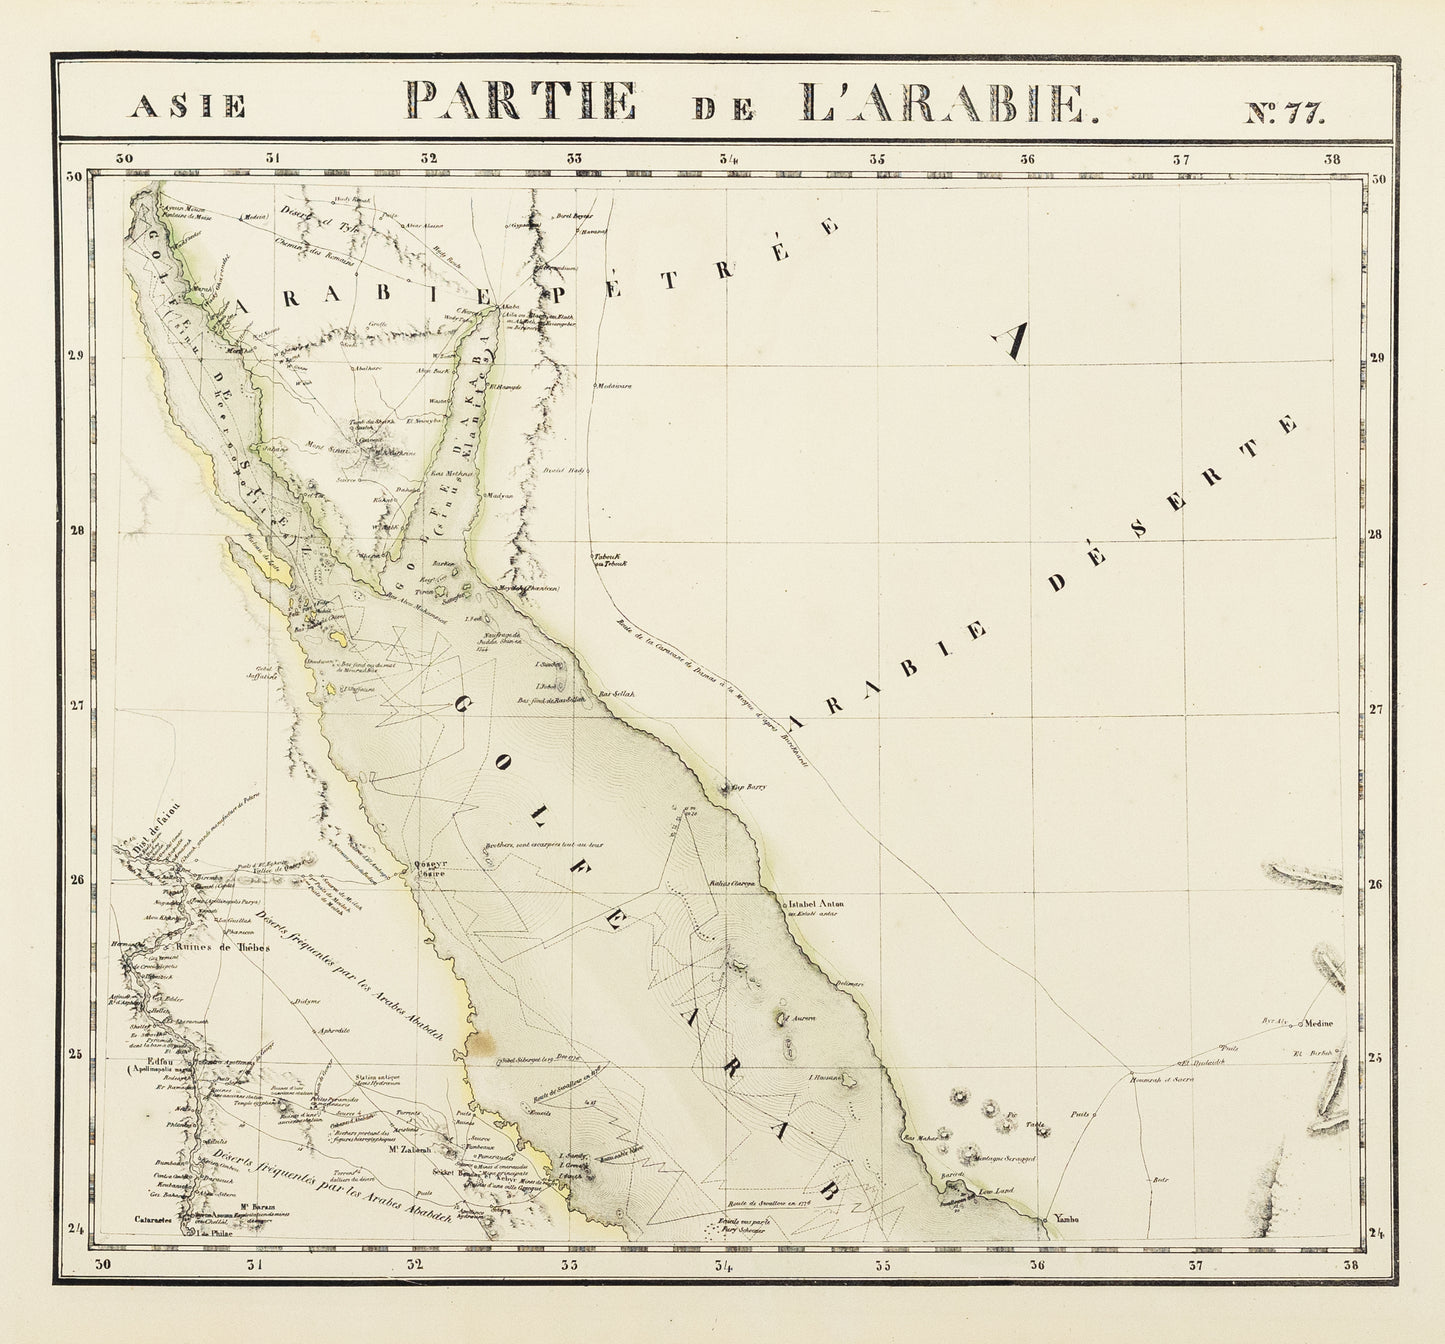 Vandermaelen, Philippe. Partie de L'Arabie. Asie No 77. Brussels: c. 1827